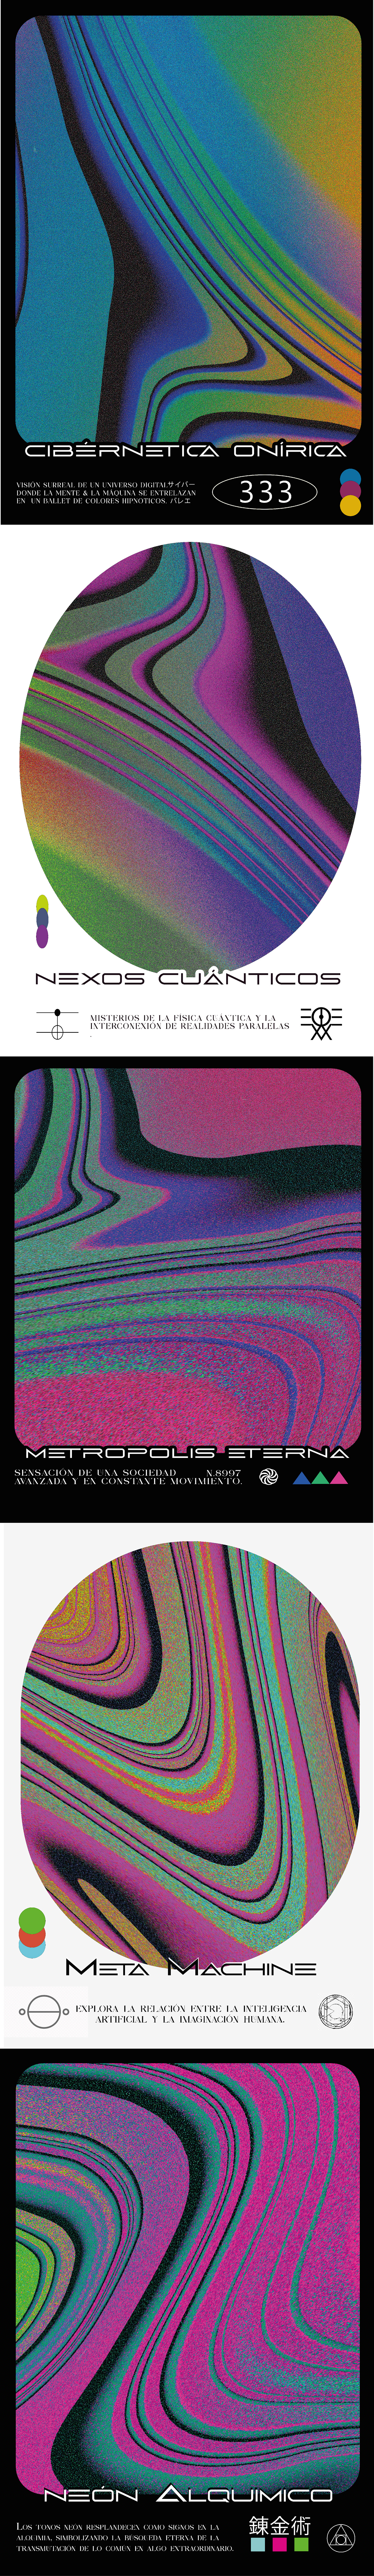 posters Poster Design poster art nanotechnology Technology science posterdesign colorful artwork